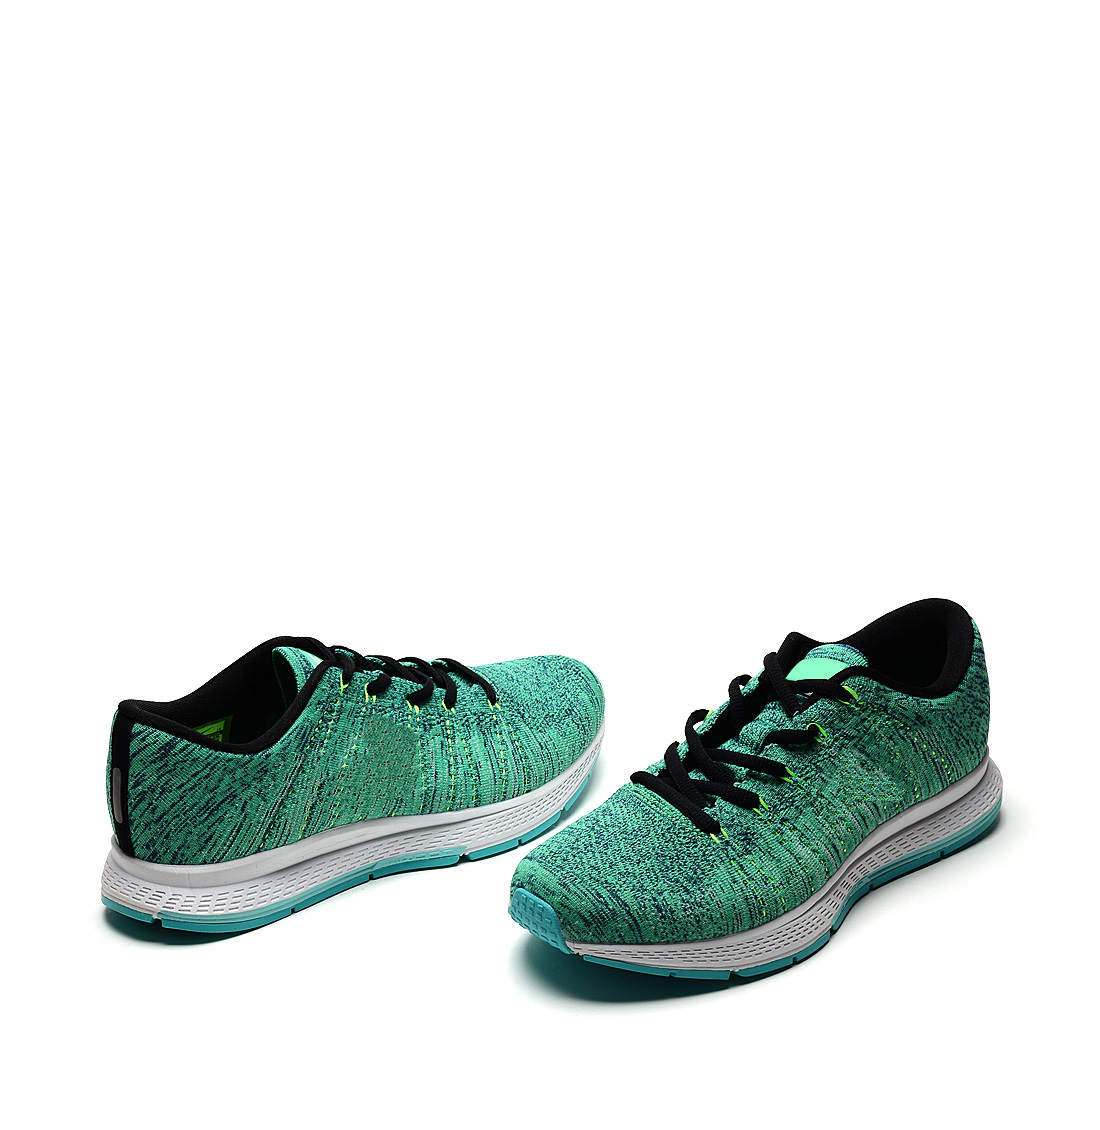 [HKAU]运动风简约织物运动鞋(尺码标准)
编号:A3537K1A77